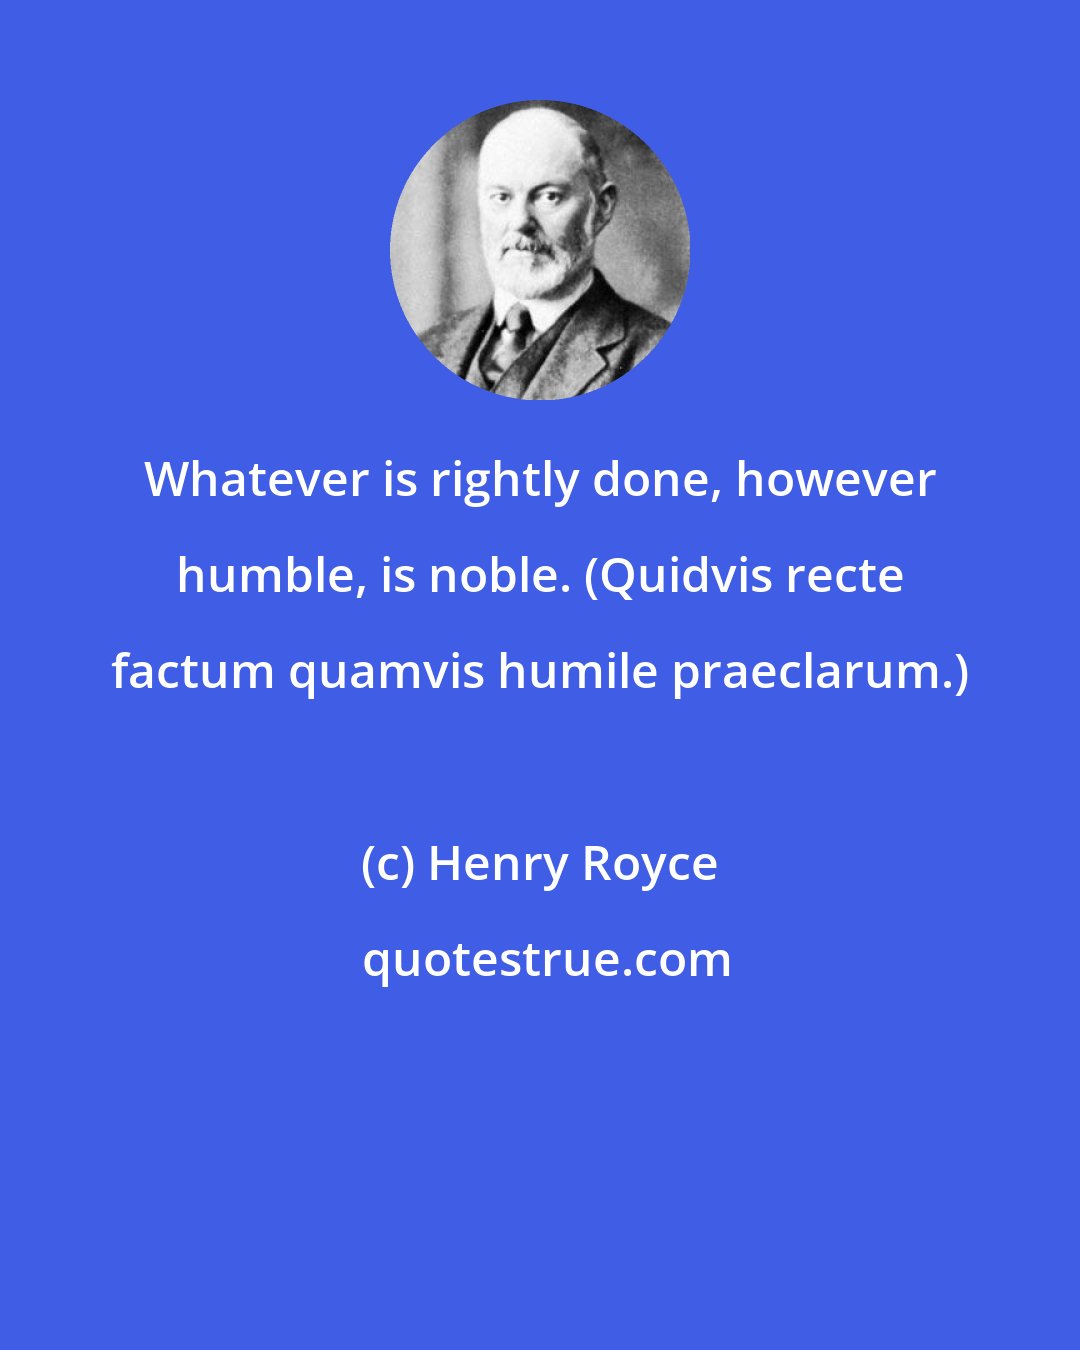 Henry Royce: Whatever is rightly done, however humble, is noble. (Quidvis recte factum quamvis humile praeclarum.)